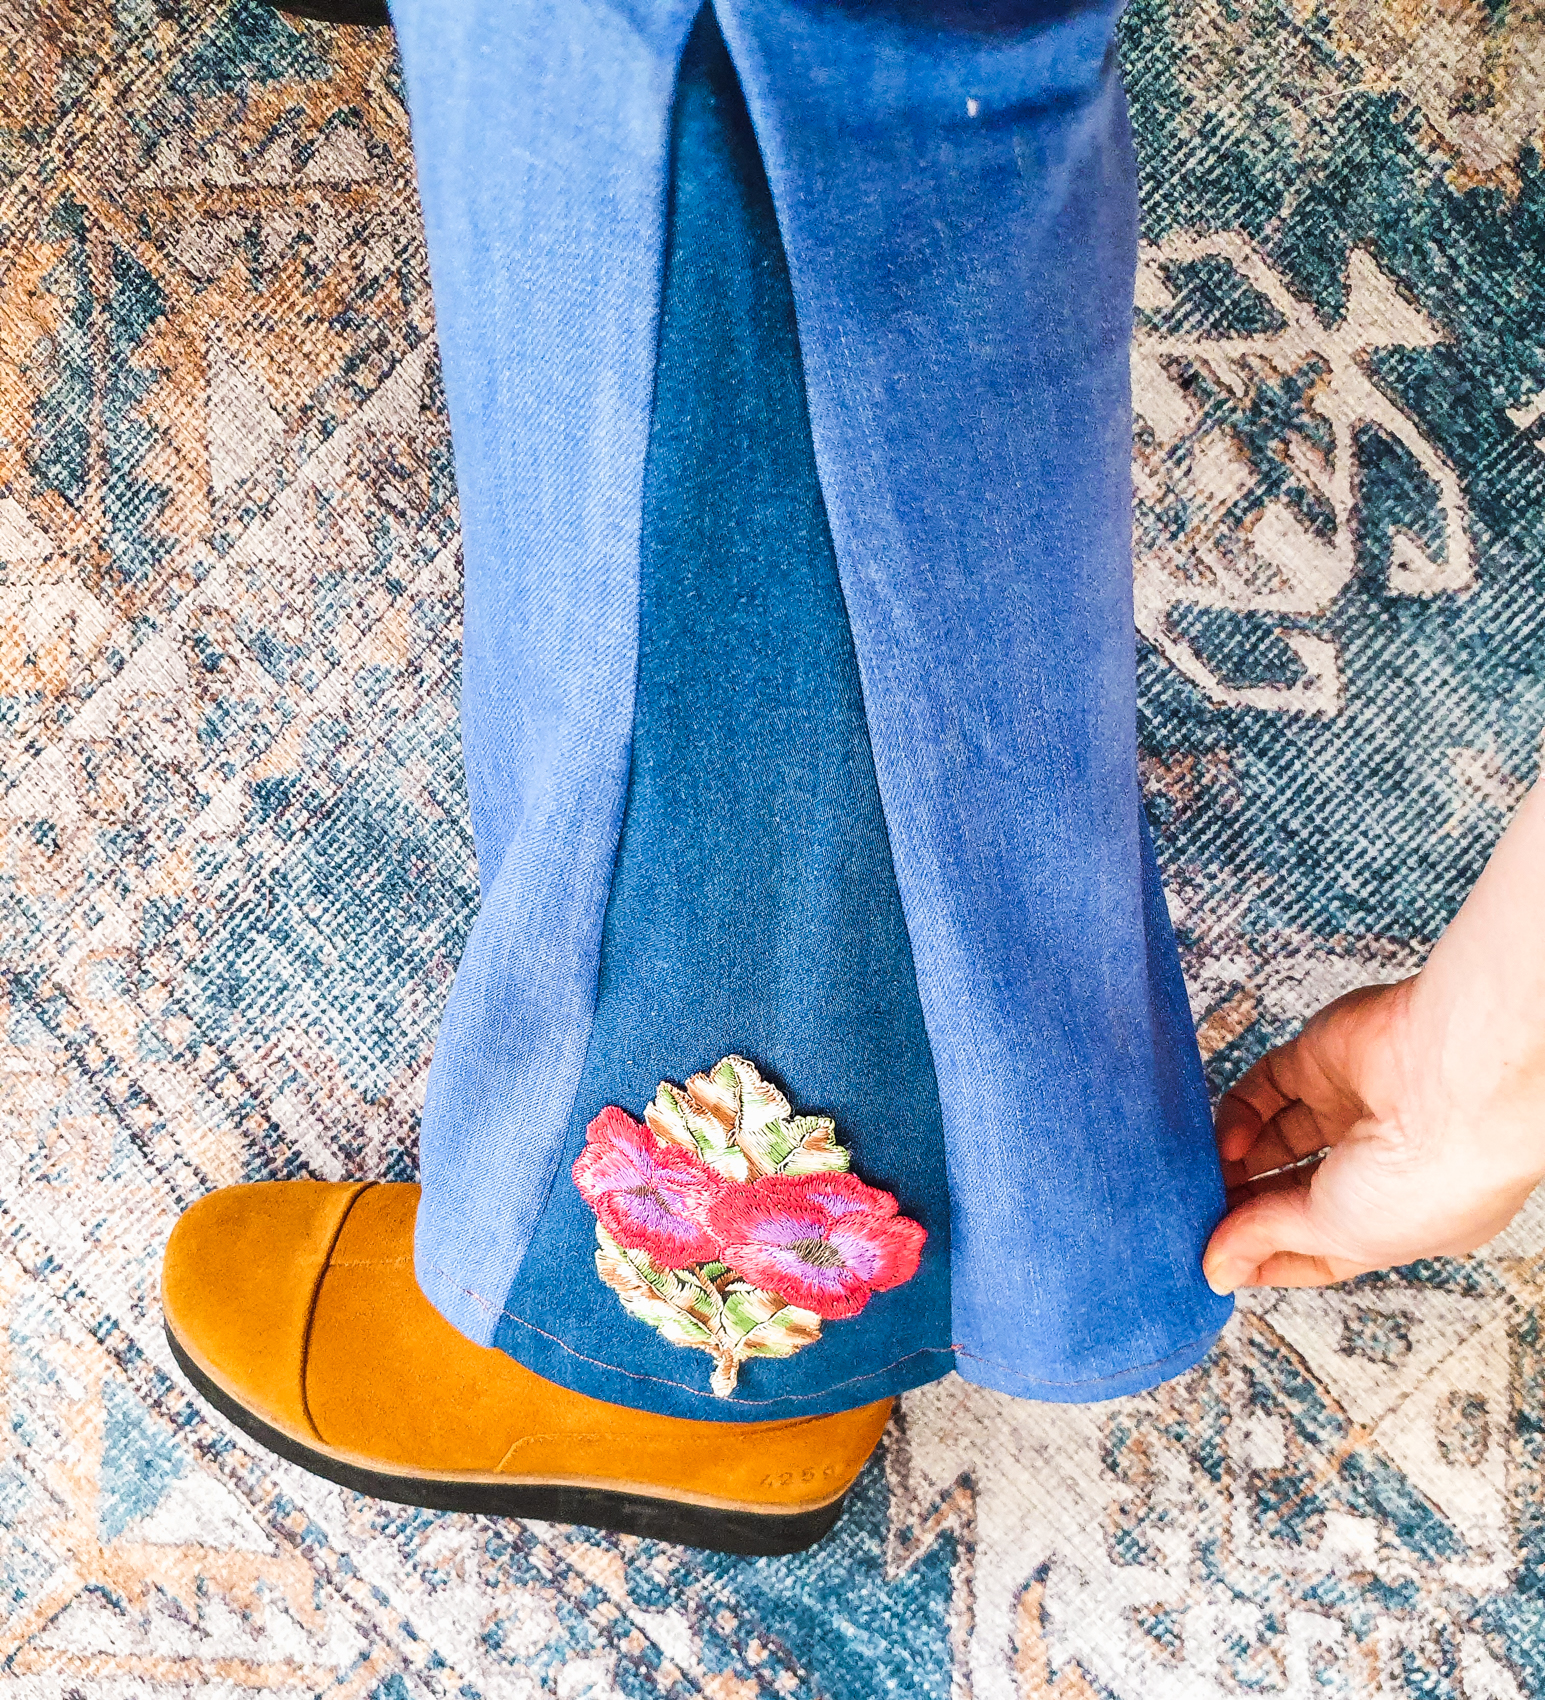 10 Minute DIY Lace Denim Jeans Refashion Tutorial - Creative Fashion Blog